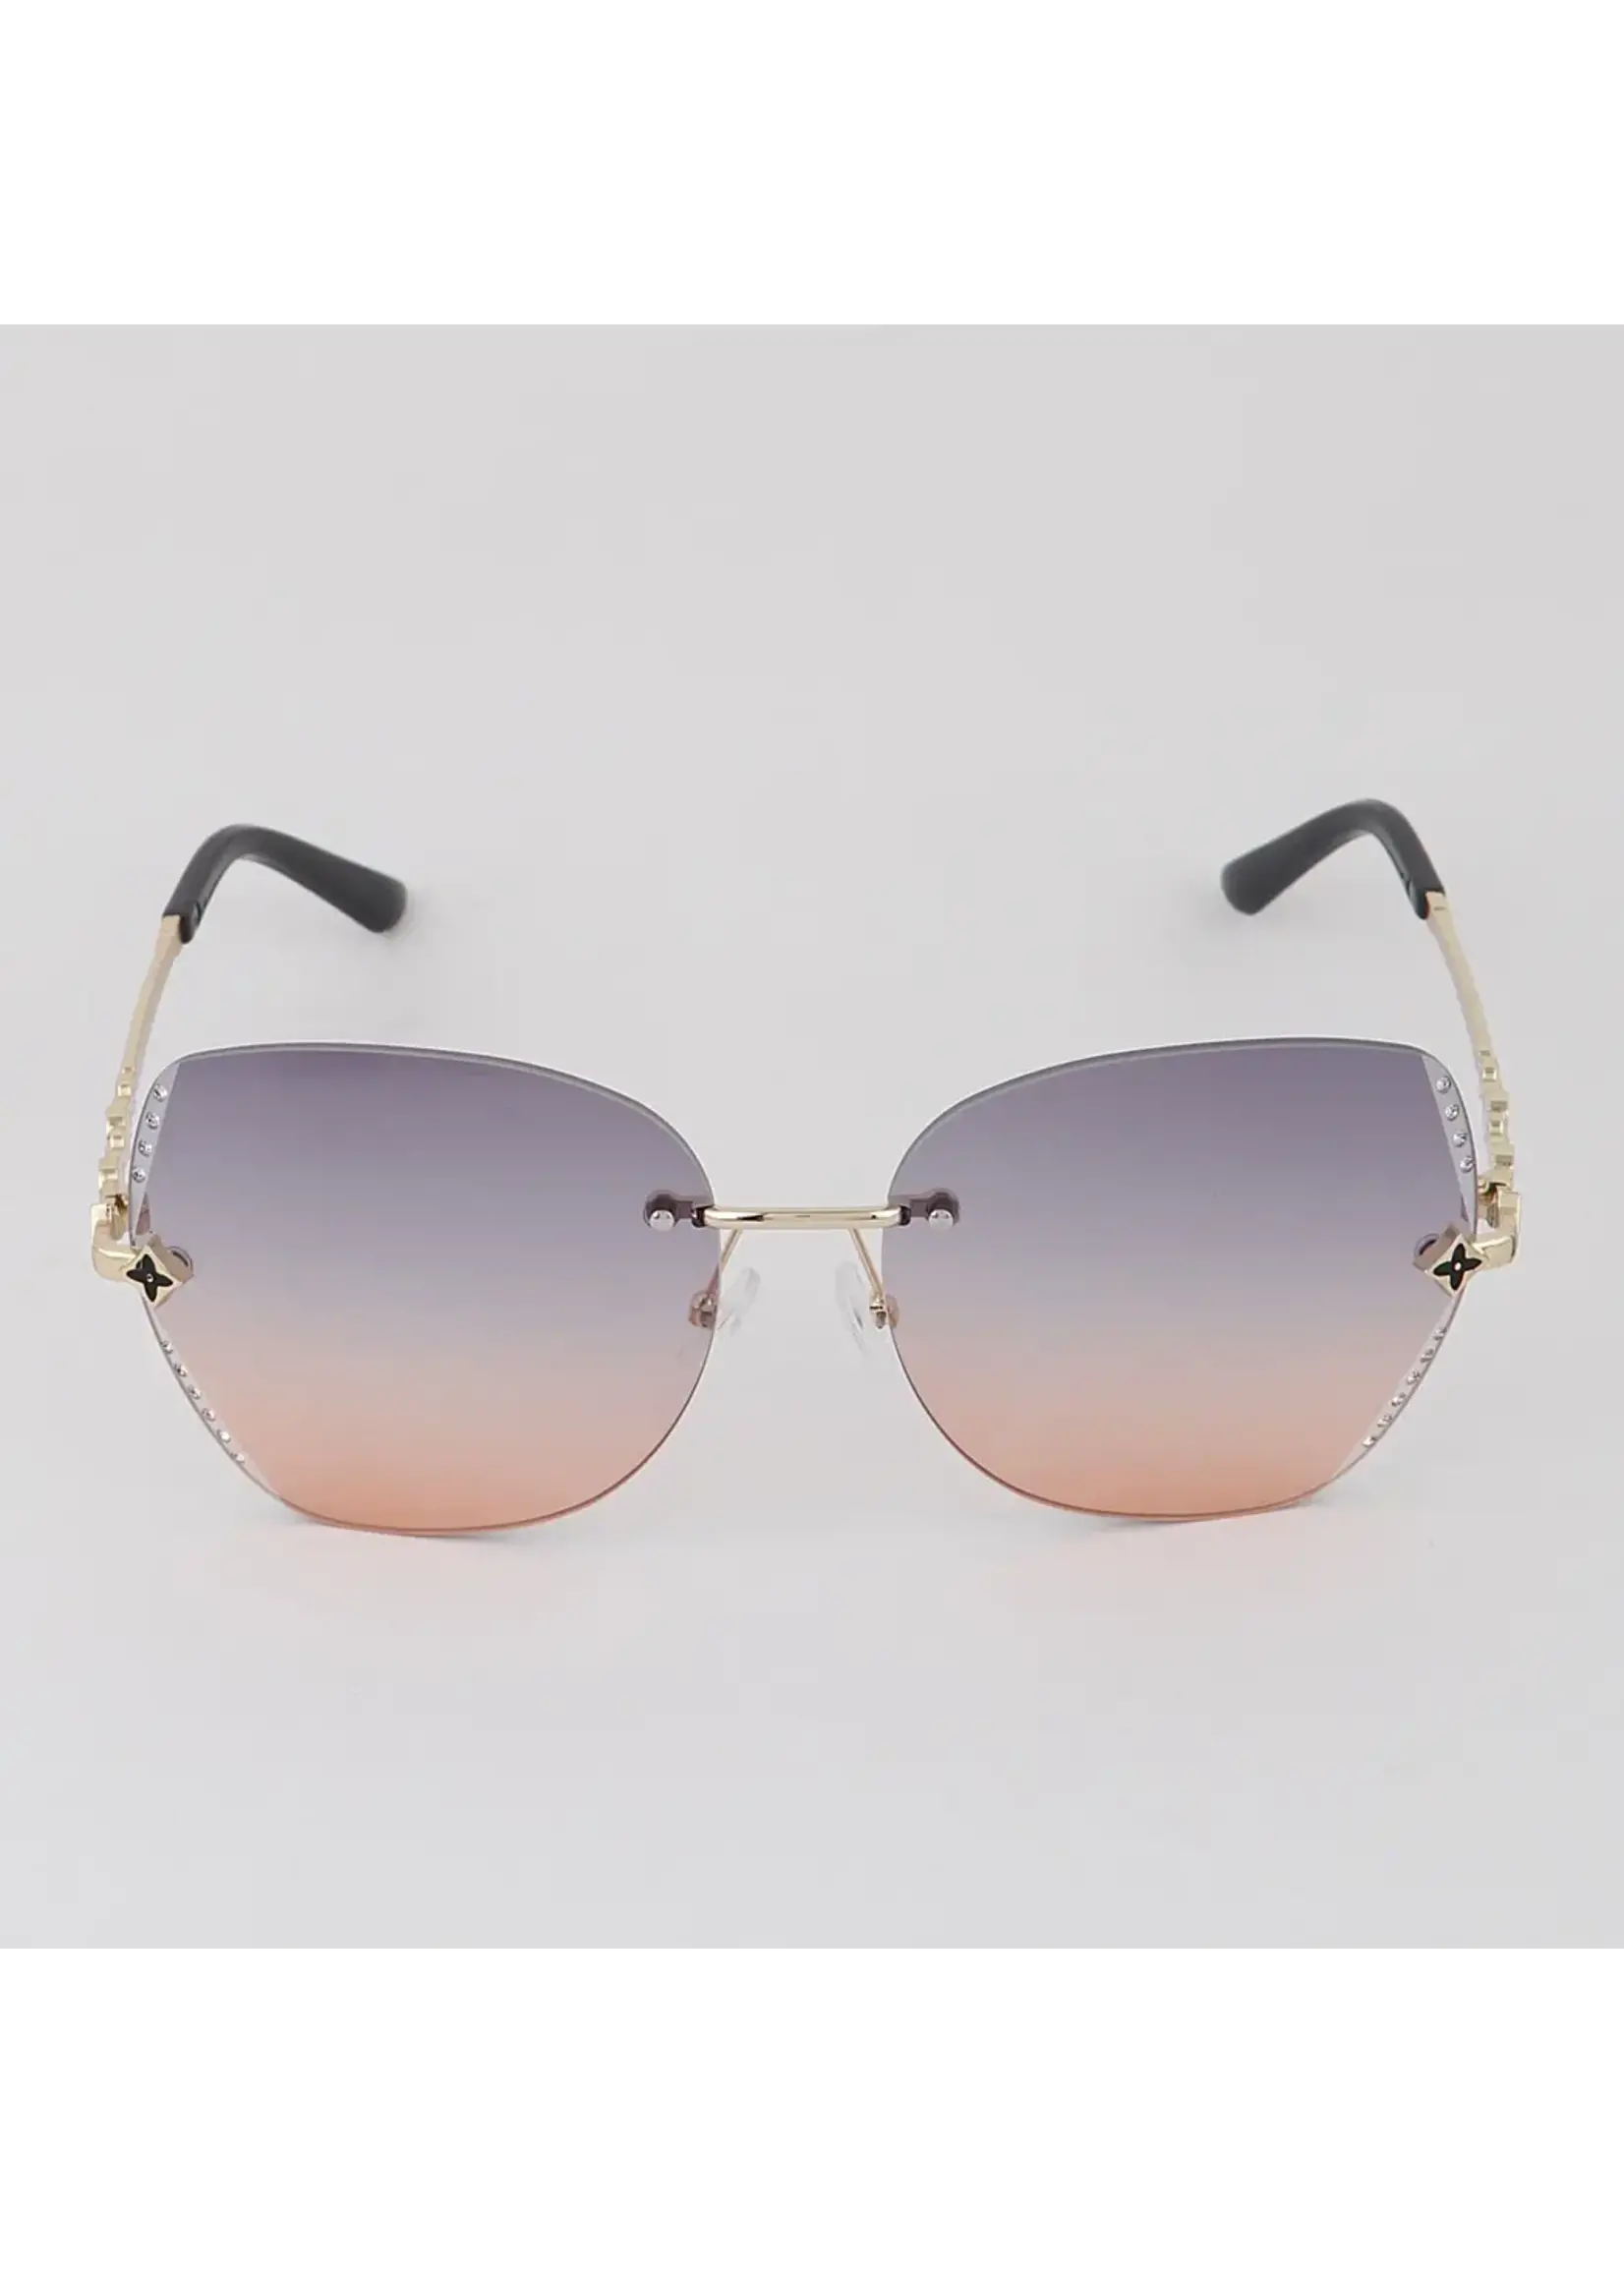 2.5 Beaded Rhinestone  Shield Sunglasses